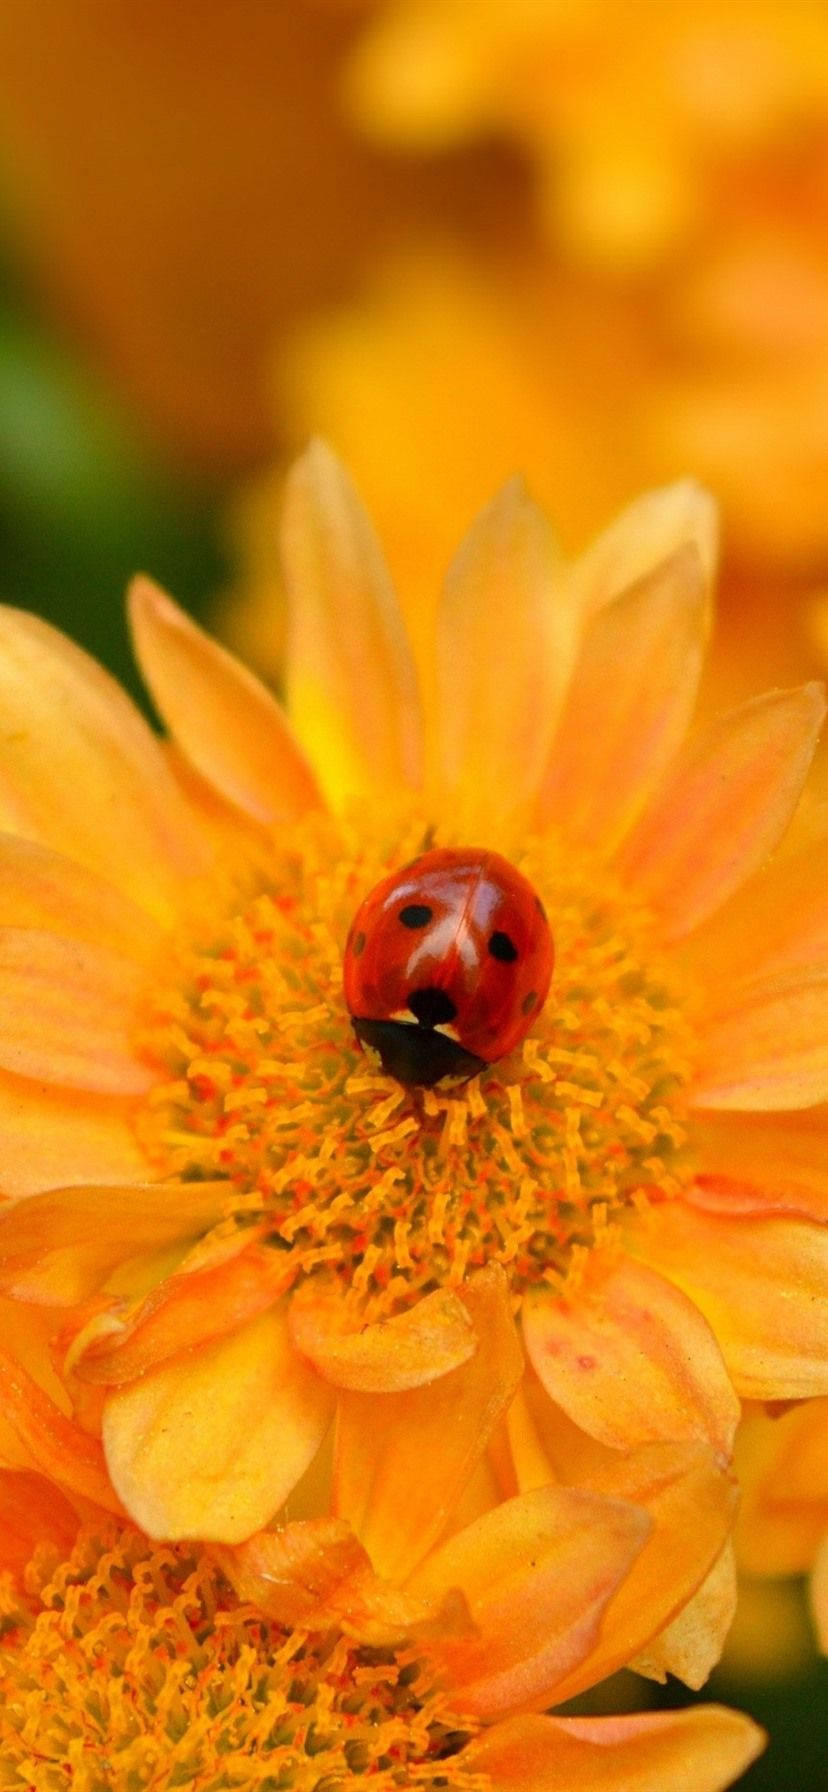 Ladybug Beetle On Orange Corn Daisy